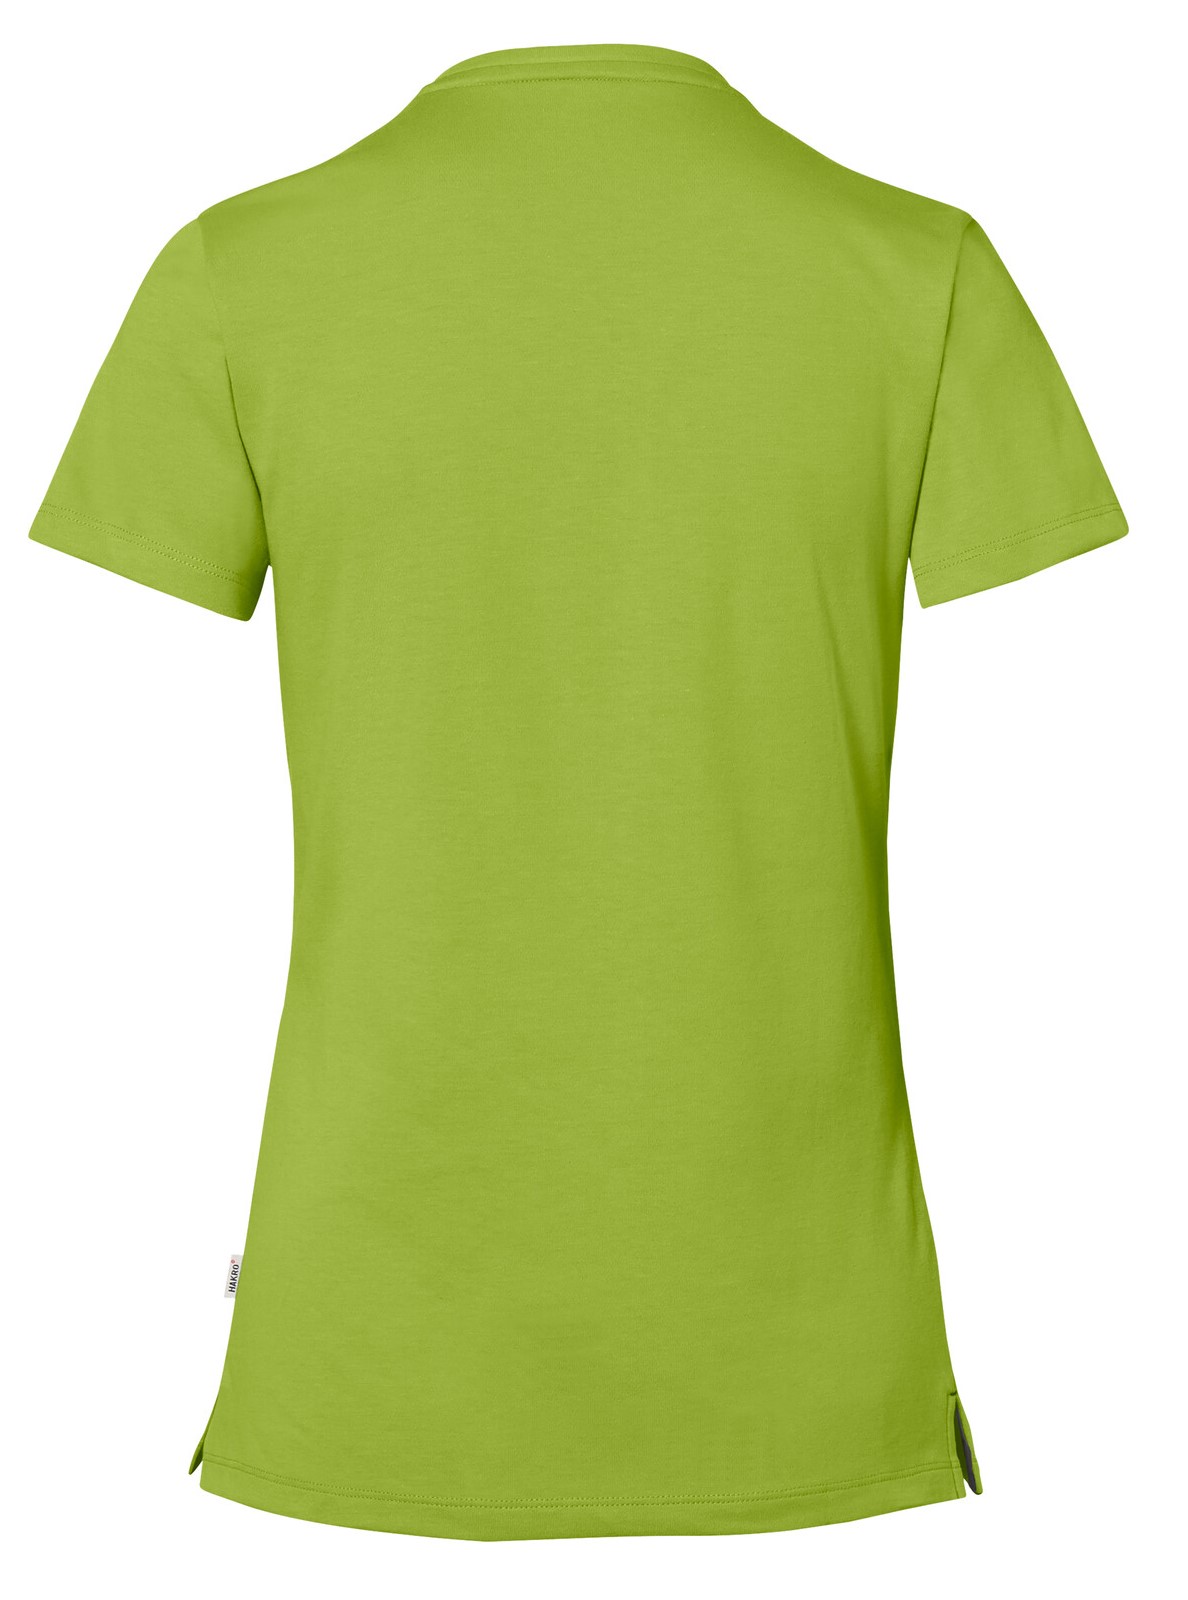 HAKRO Damen-V-Shirt 169 Cotton-Tec